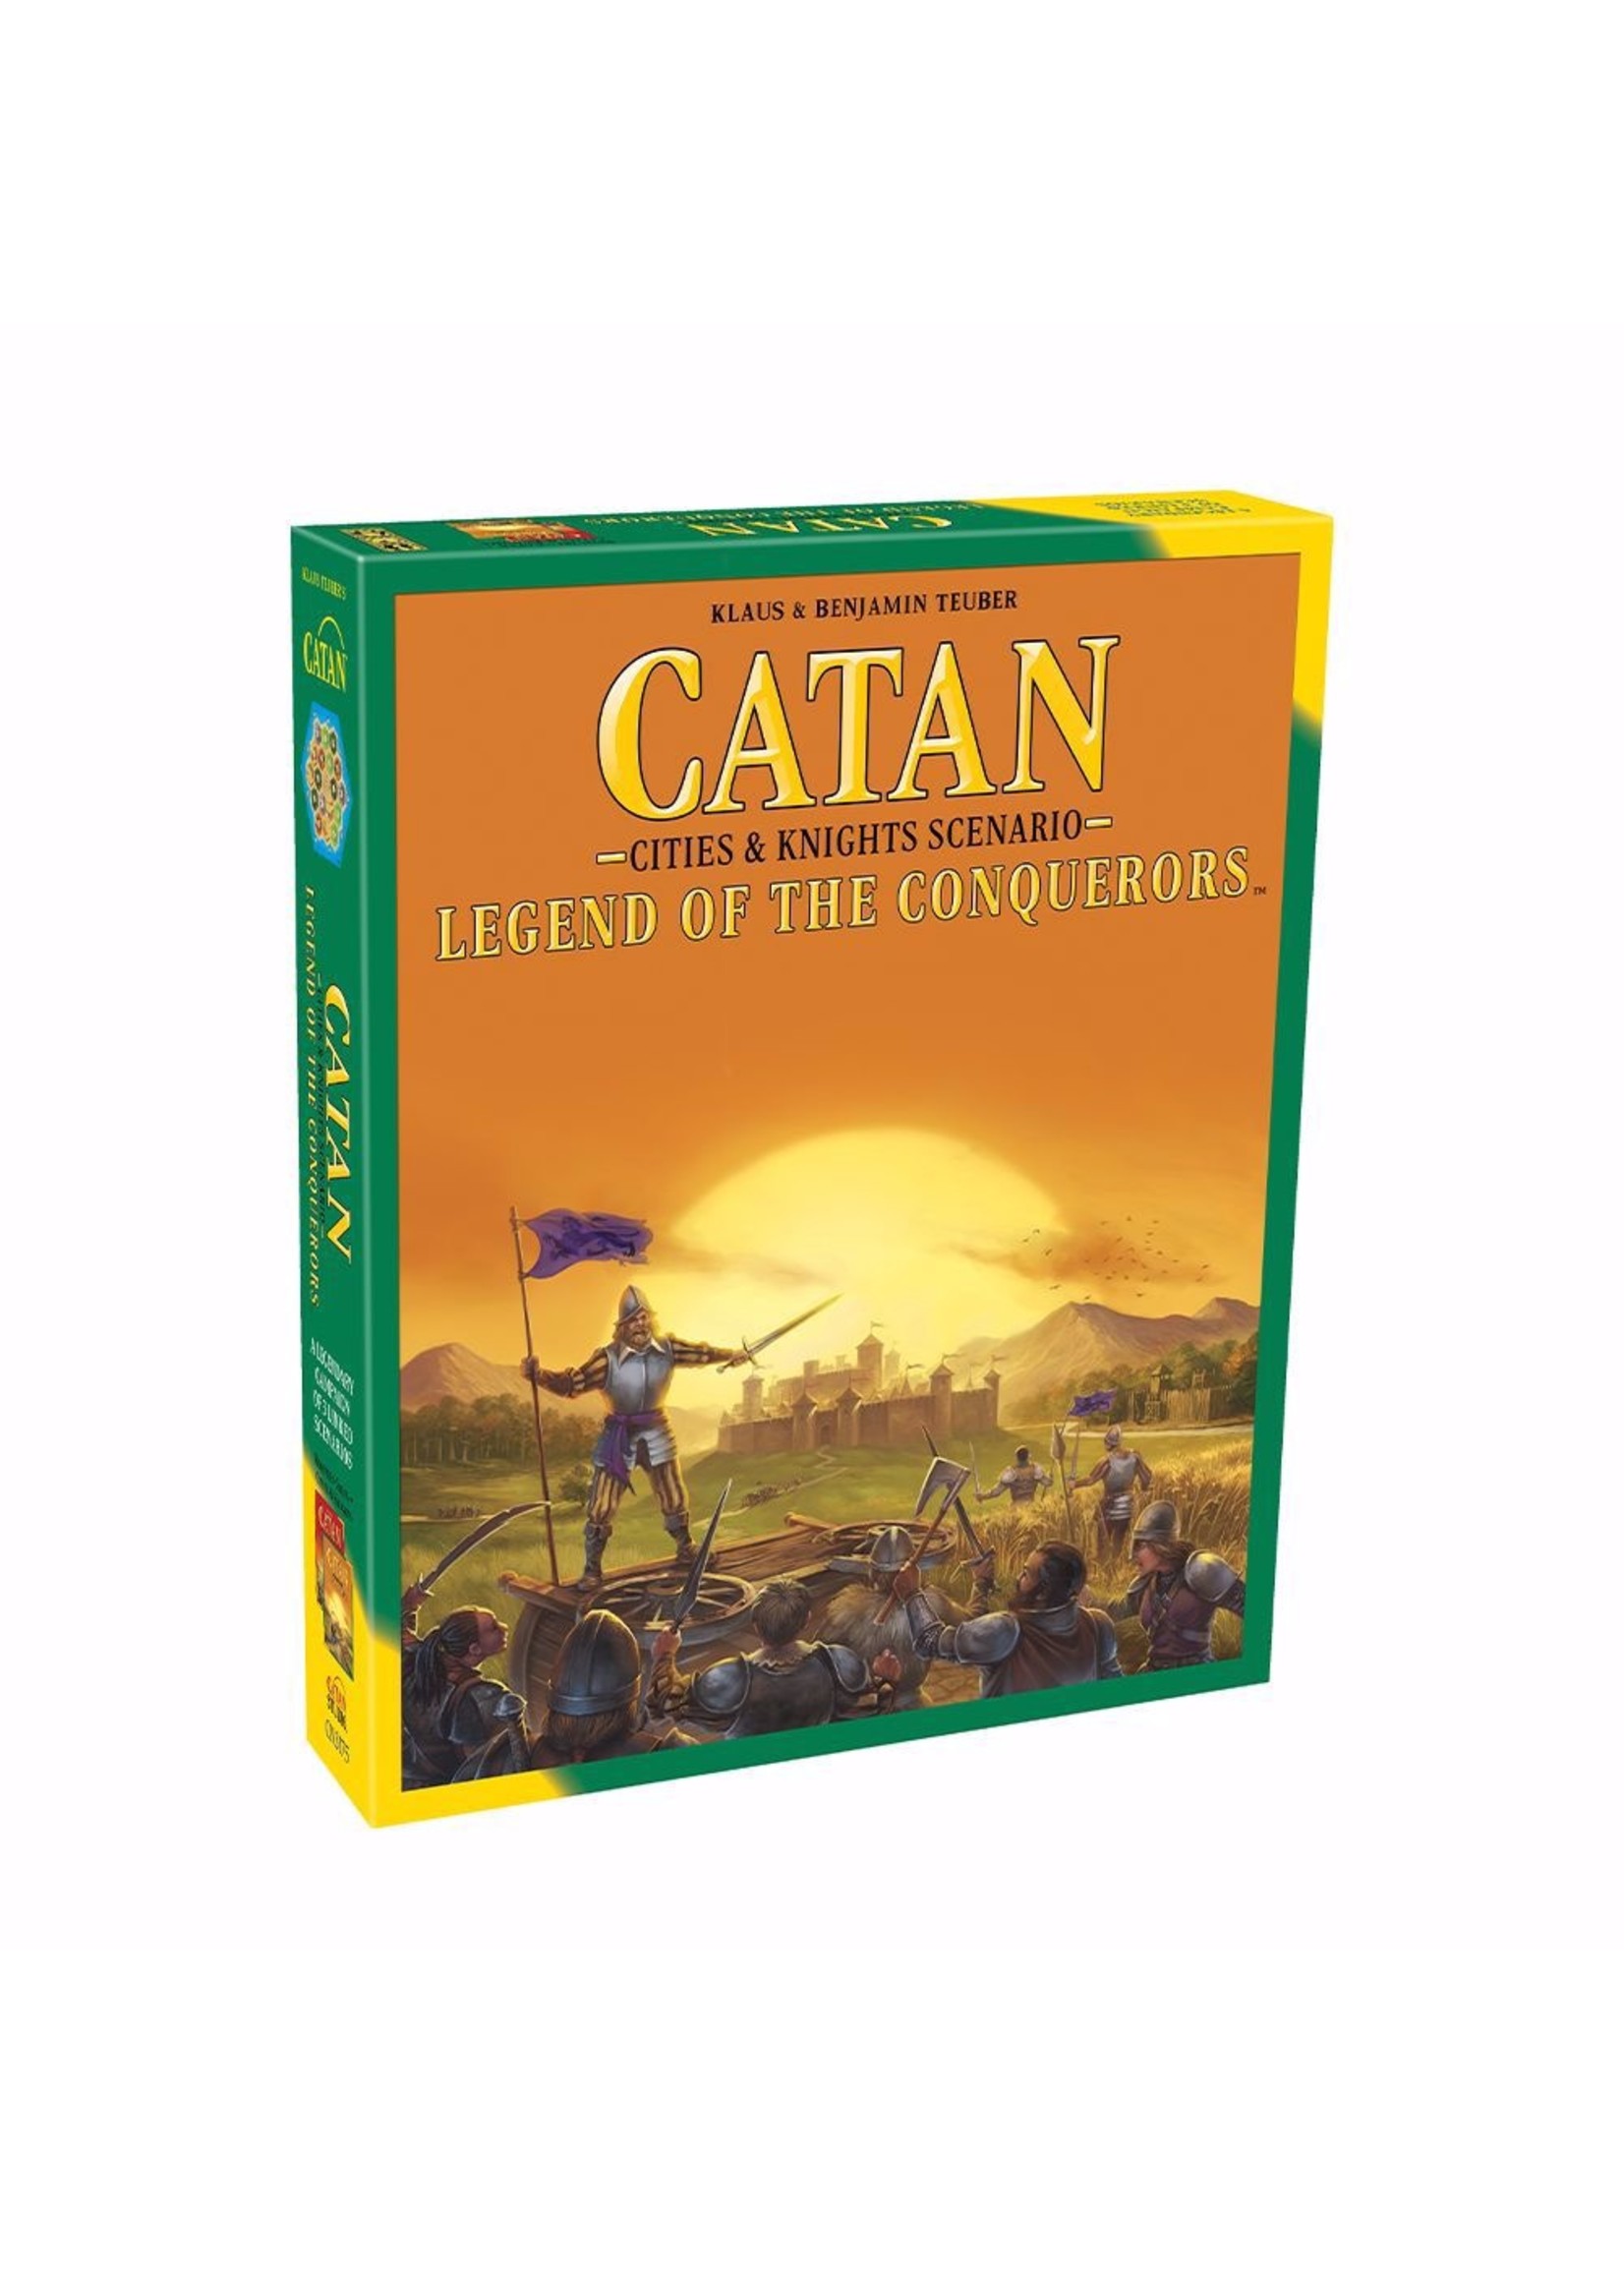 Catan Studios Catan: Legend of the Conquerers - Cities & Knights Scenario